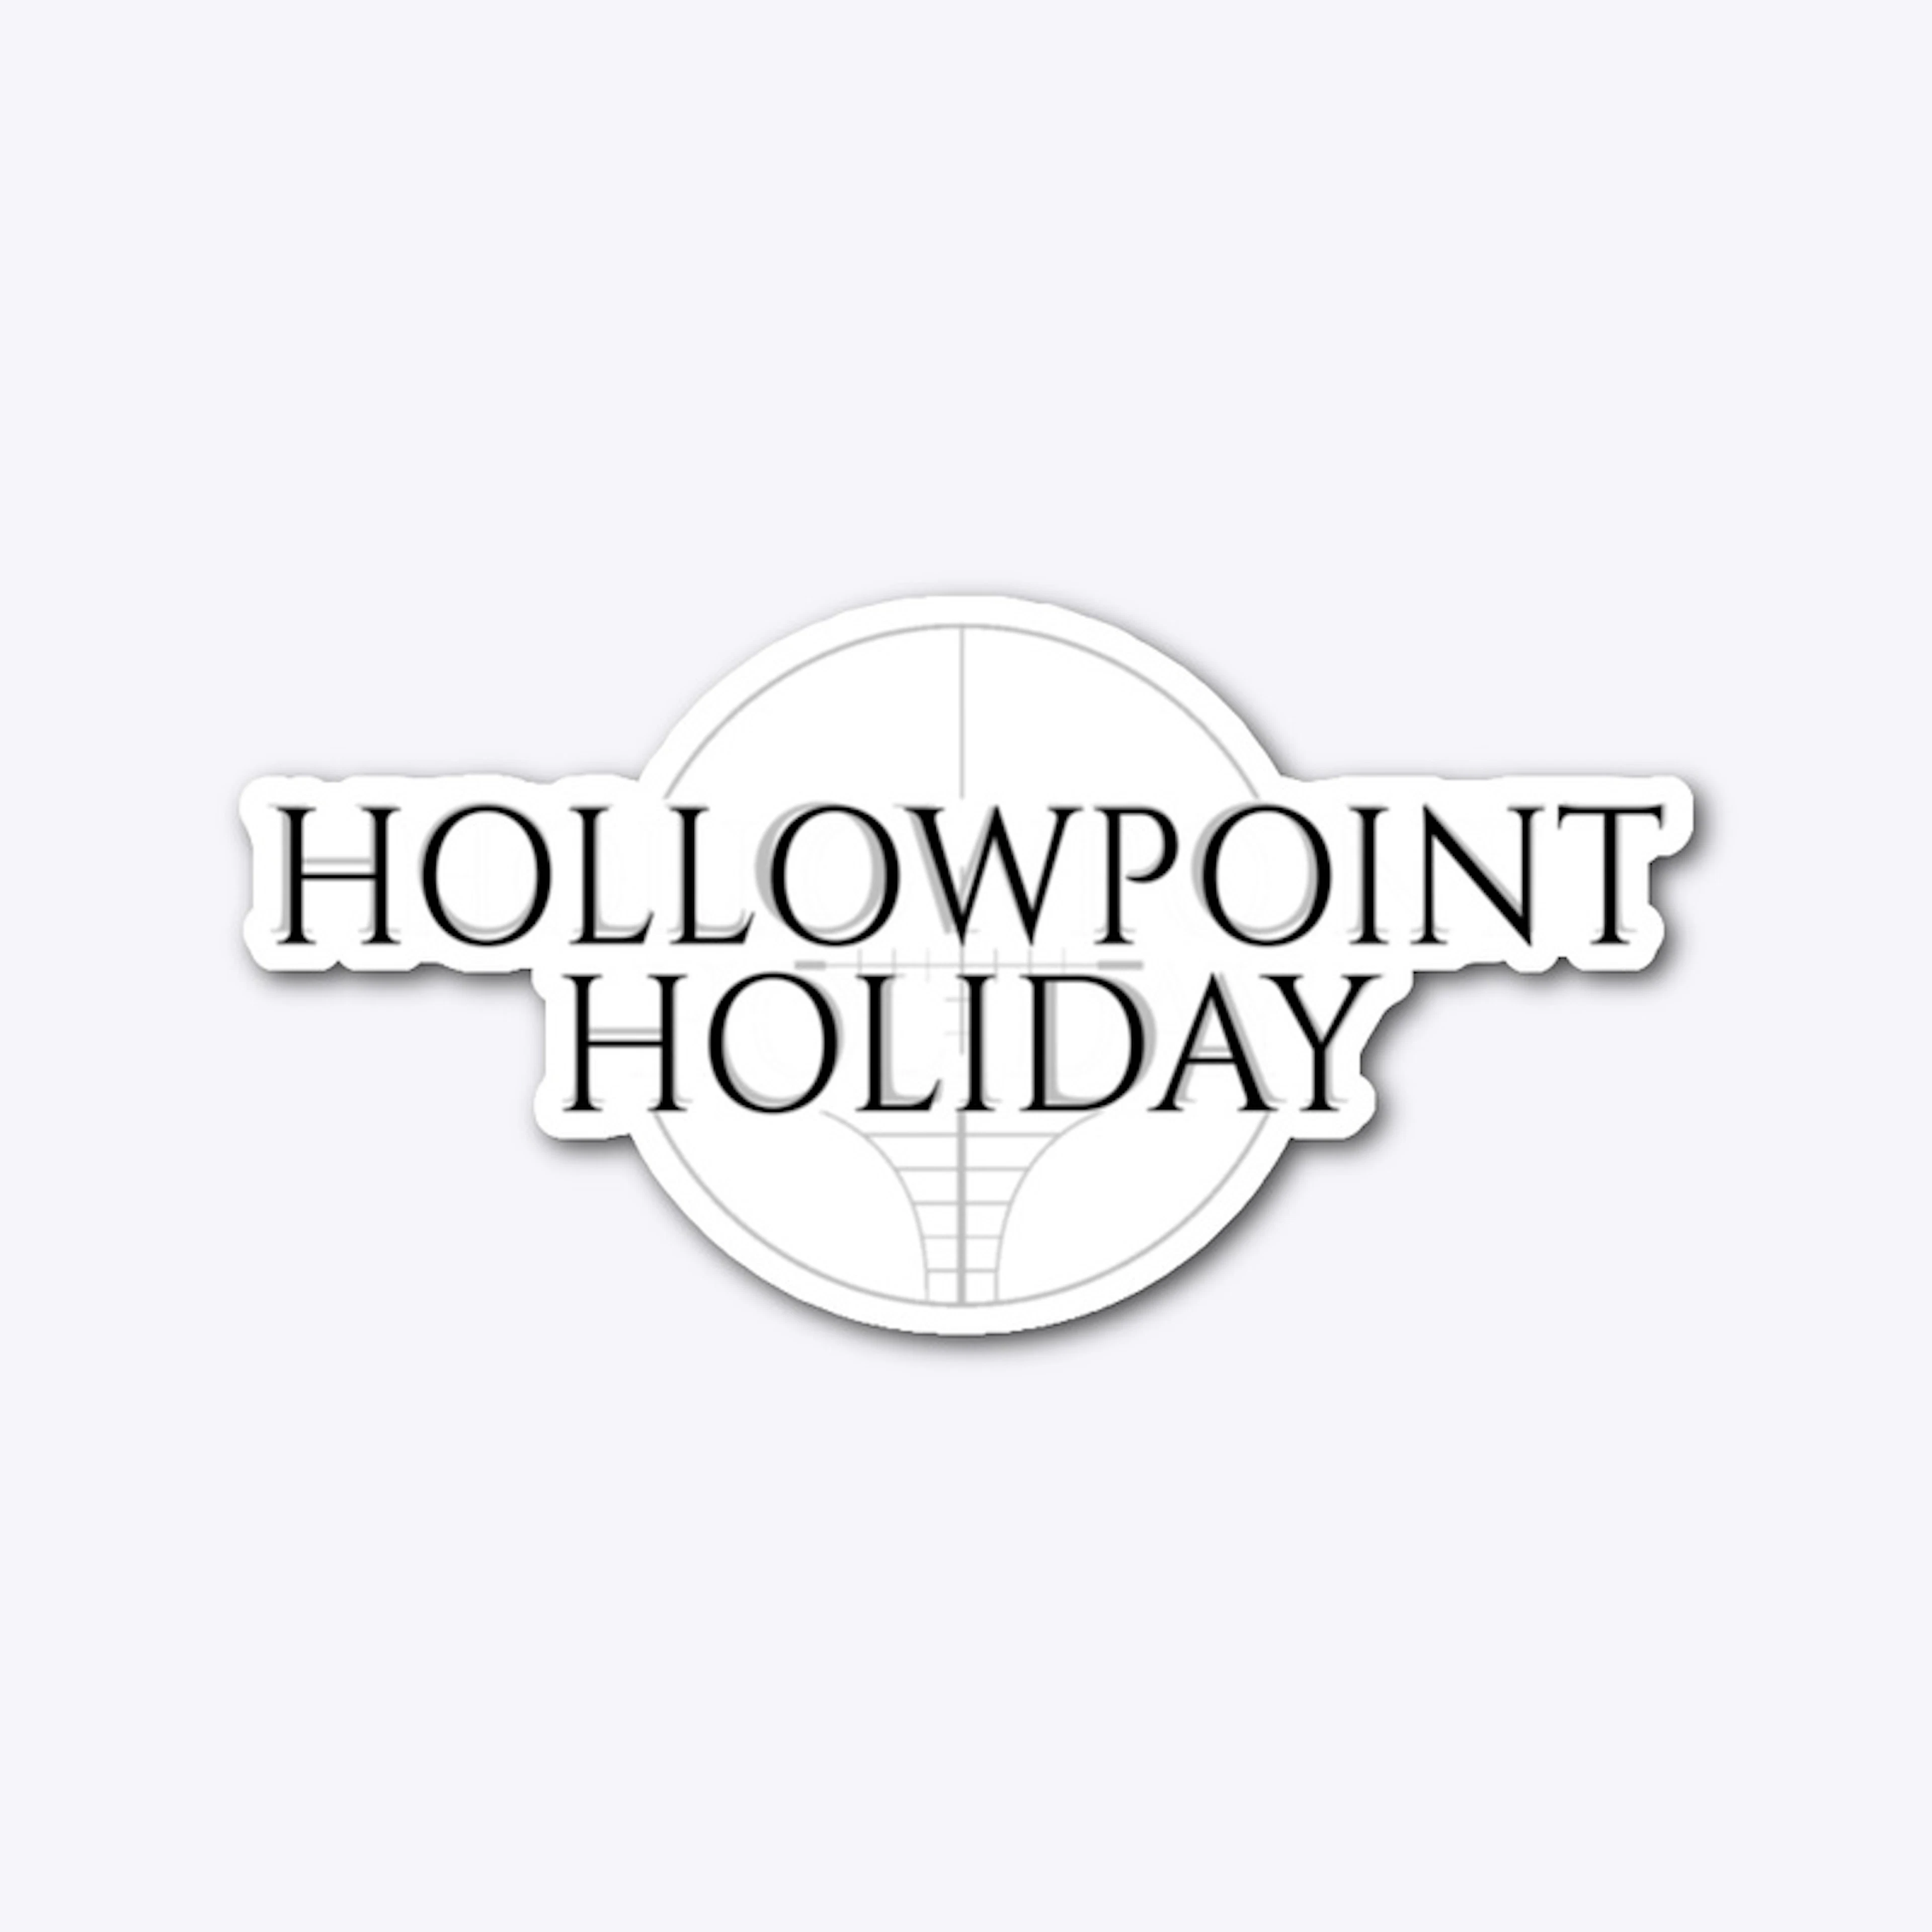 Hollowpoint Holiday Sticker